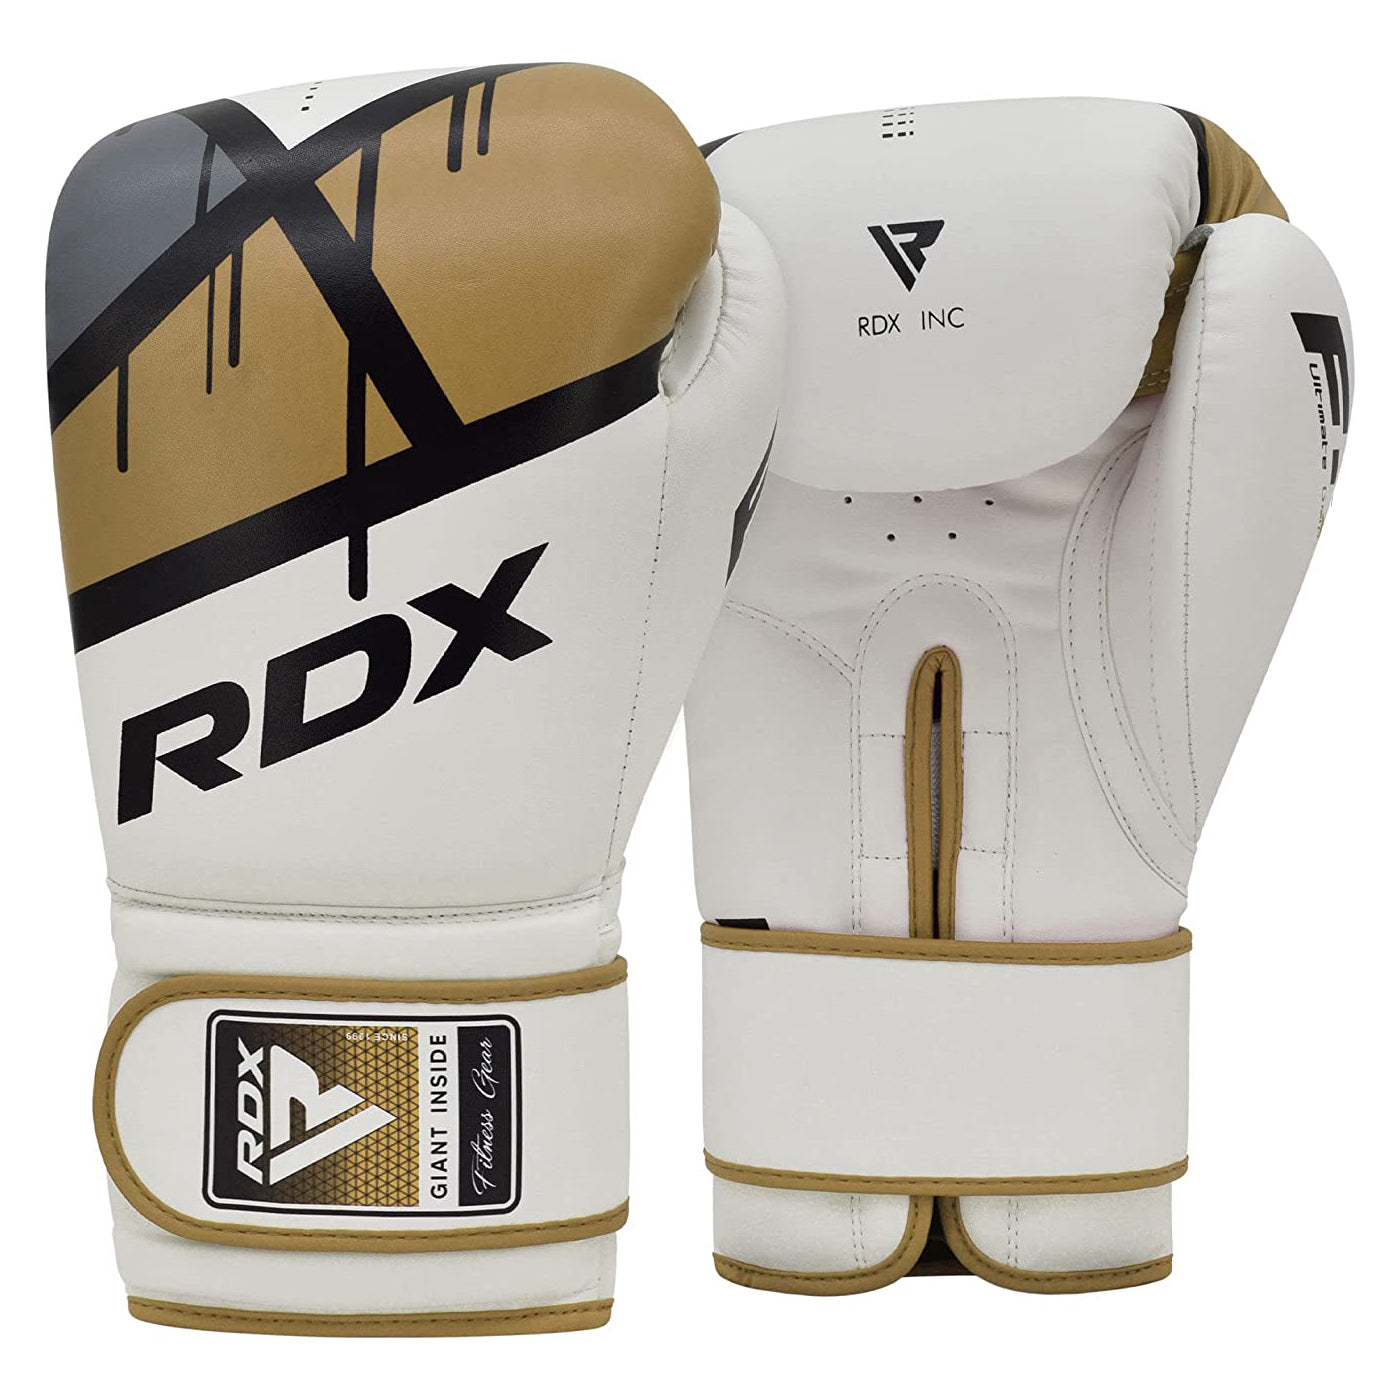 RDX F7 EGO MMA, BJJ, Muay Thai, Kickboxing, Training Boxing Gloves - GOLDEN - 8OZ - Pro-Distributing